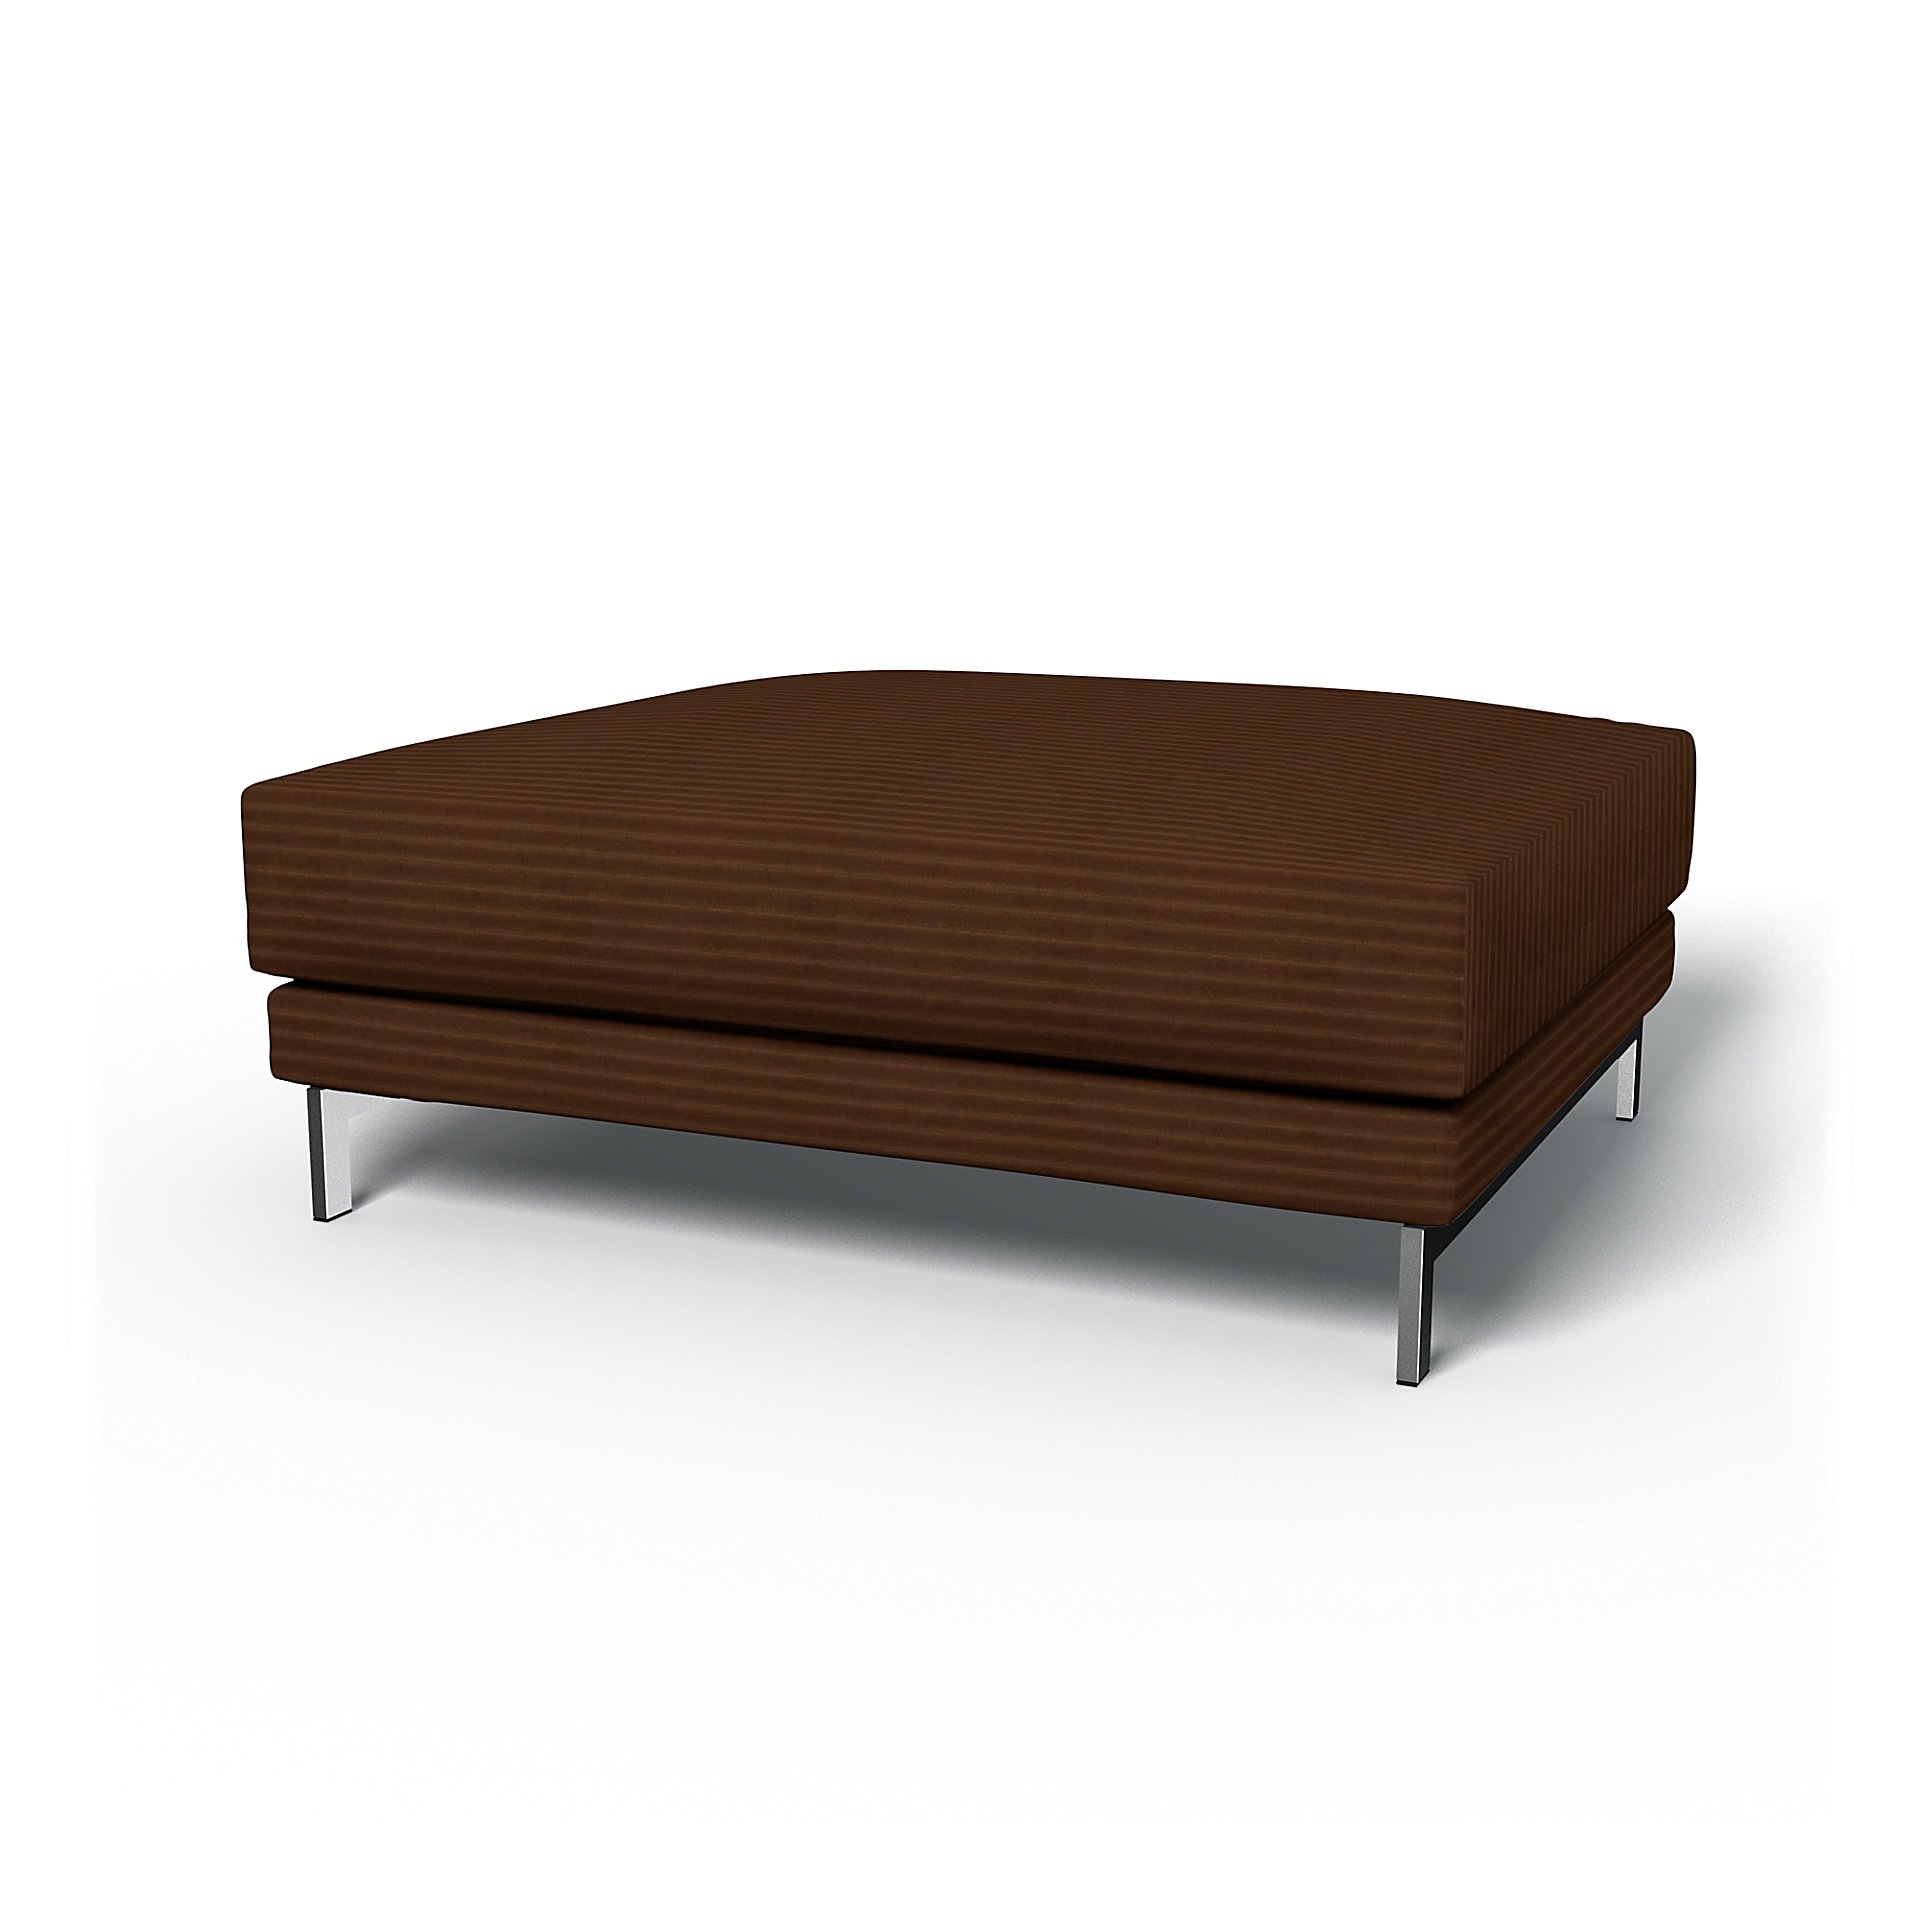 IKEA - Nockeby Footstool Cover, Chocolate Brown, Corduroy - Bemz